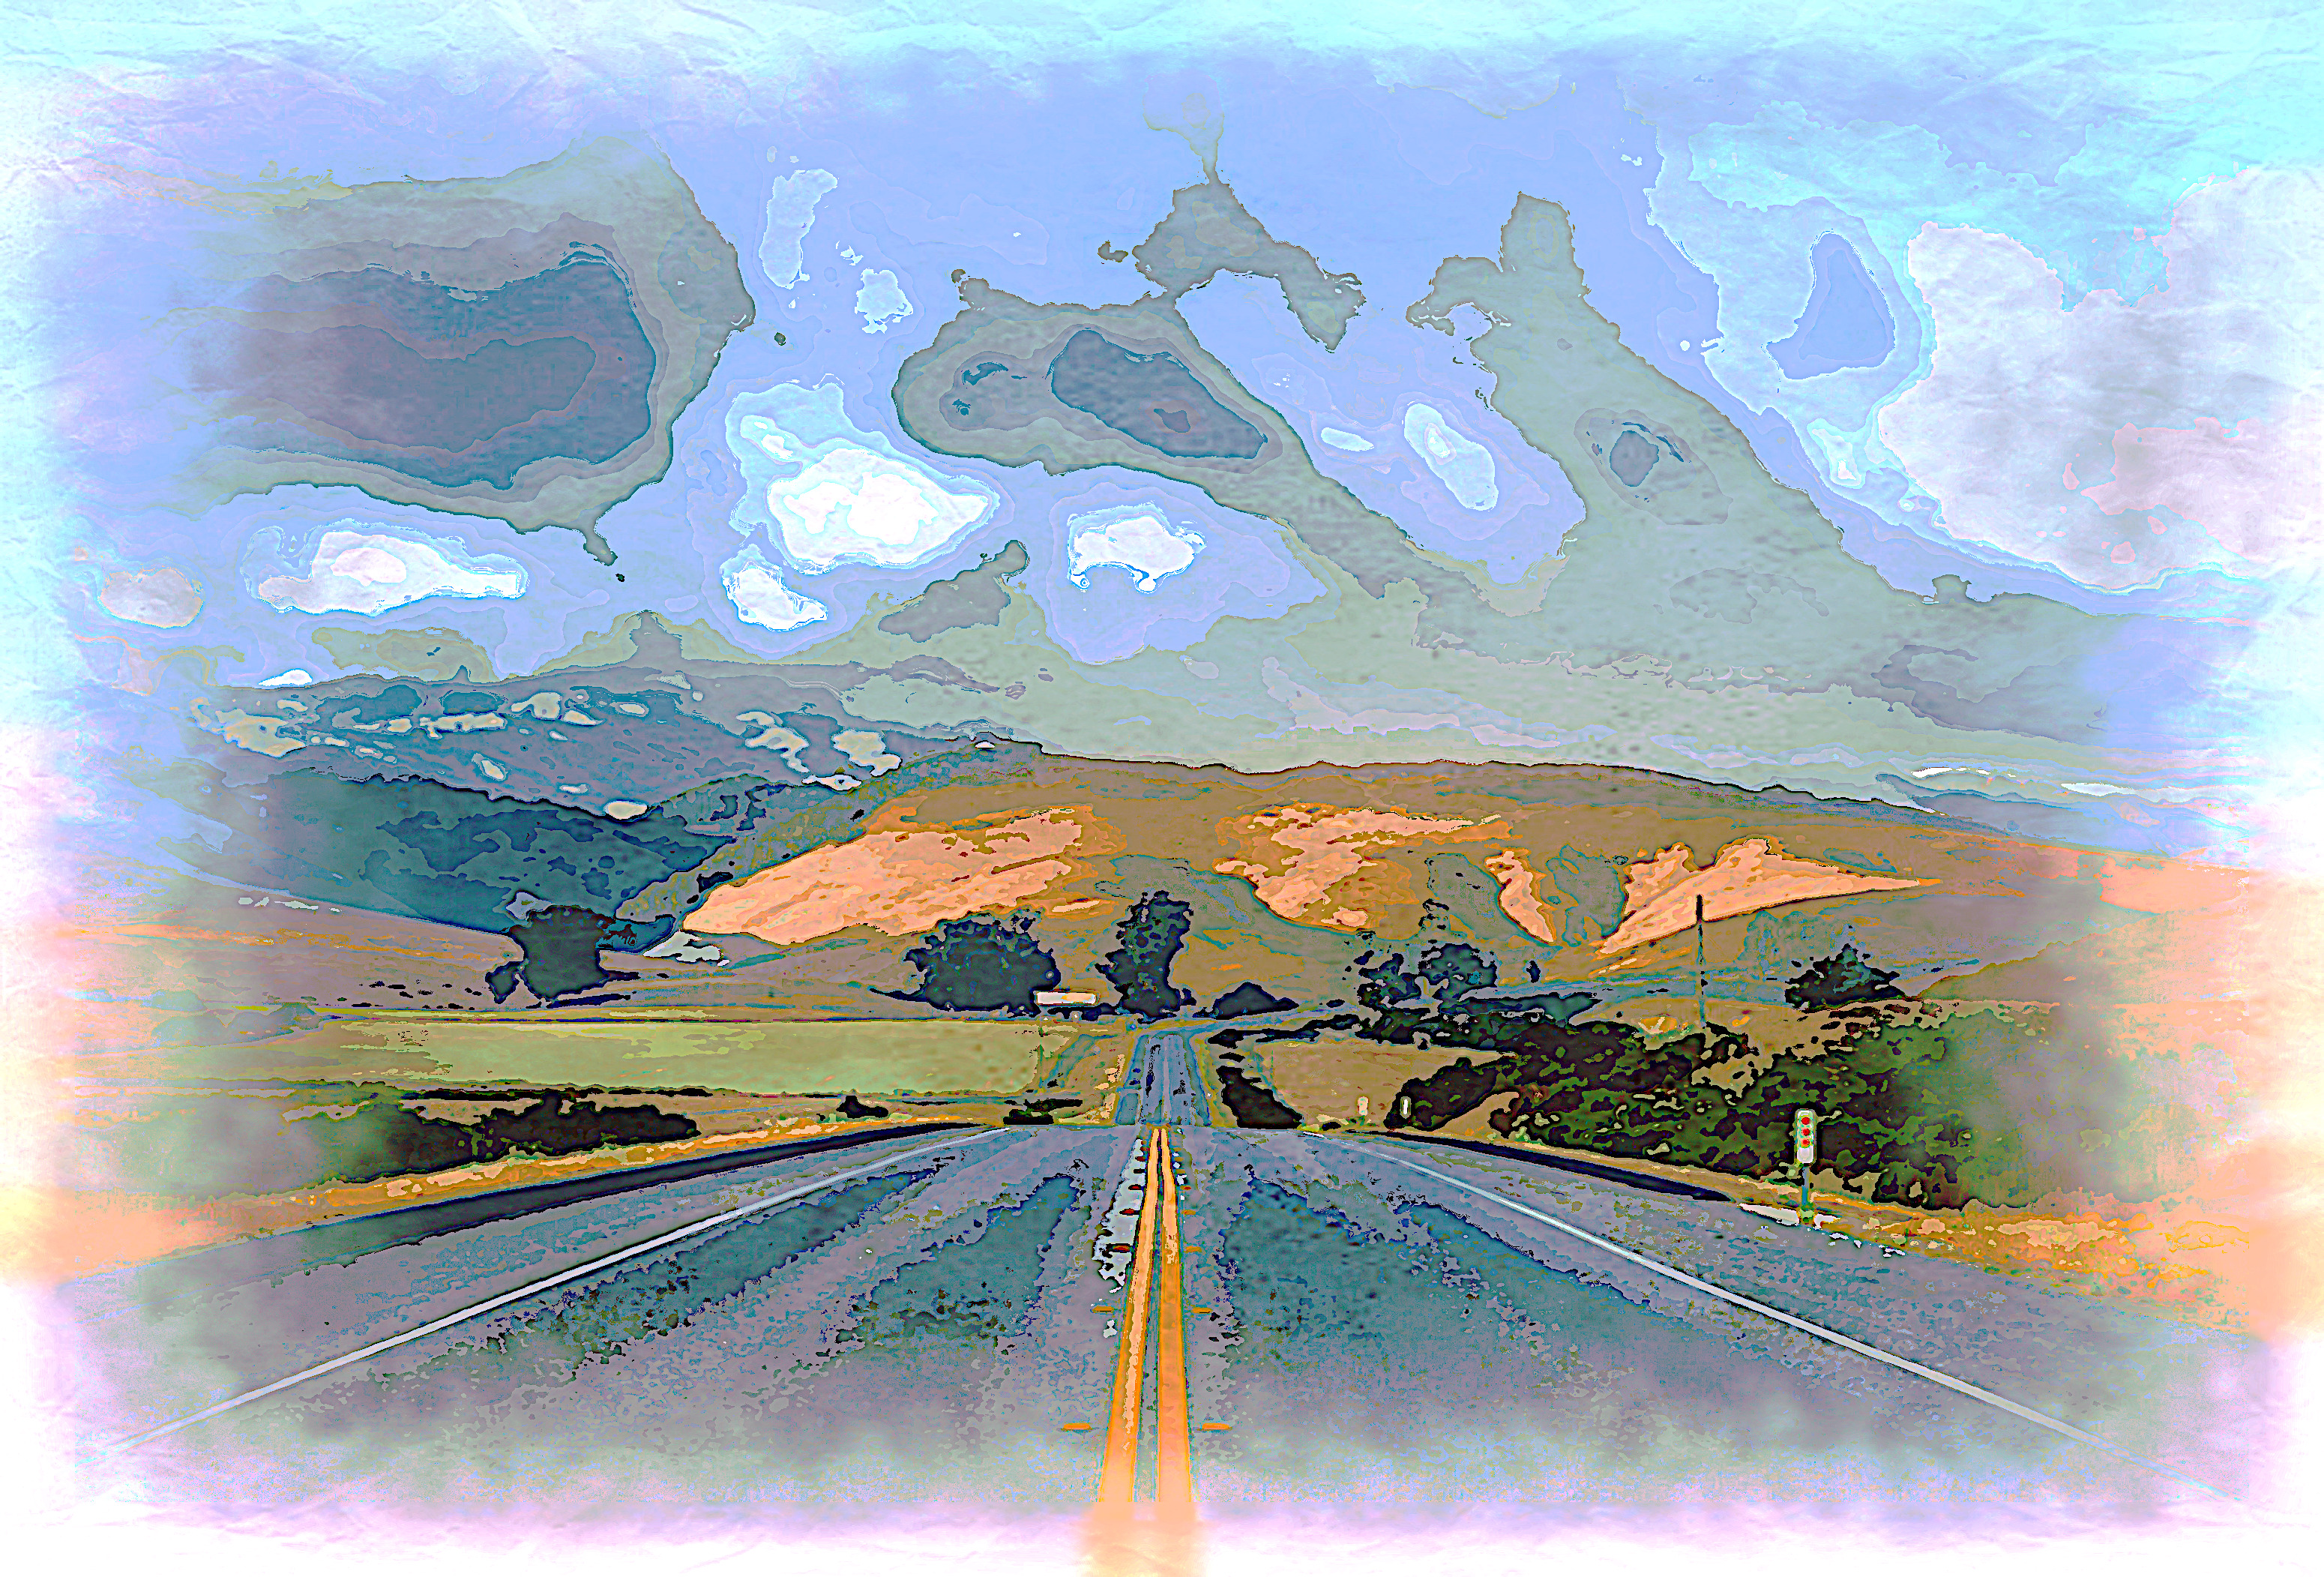 2020-04-05 07-11-59 california-210913 as a digital aquarel, using18 colours, source landscape, look contrast plus.jpg